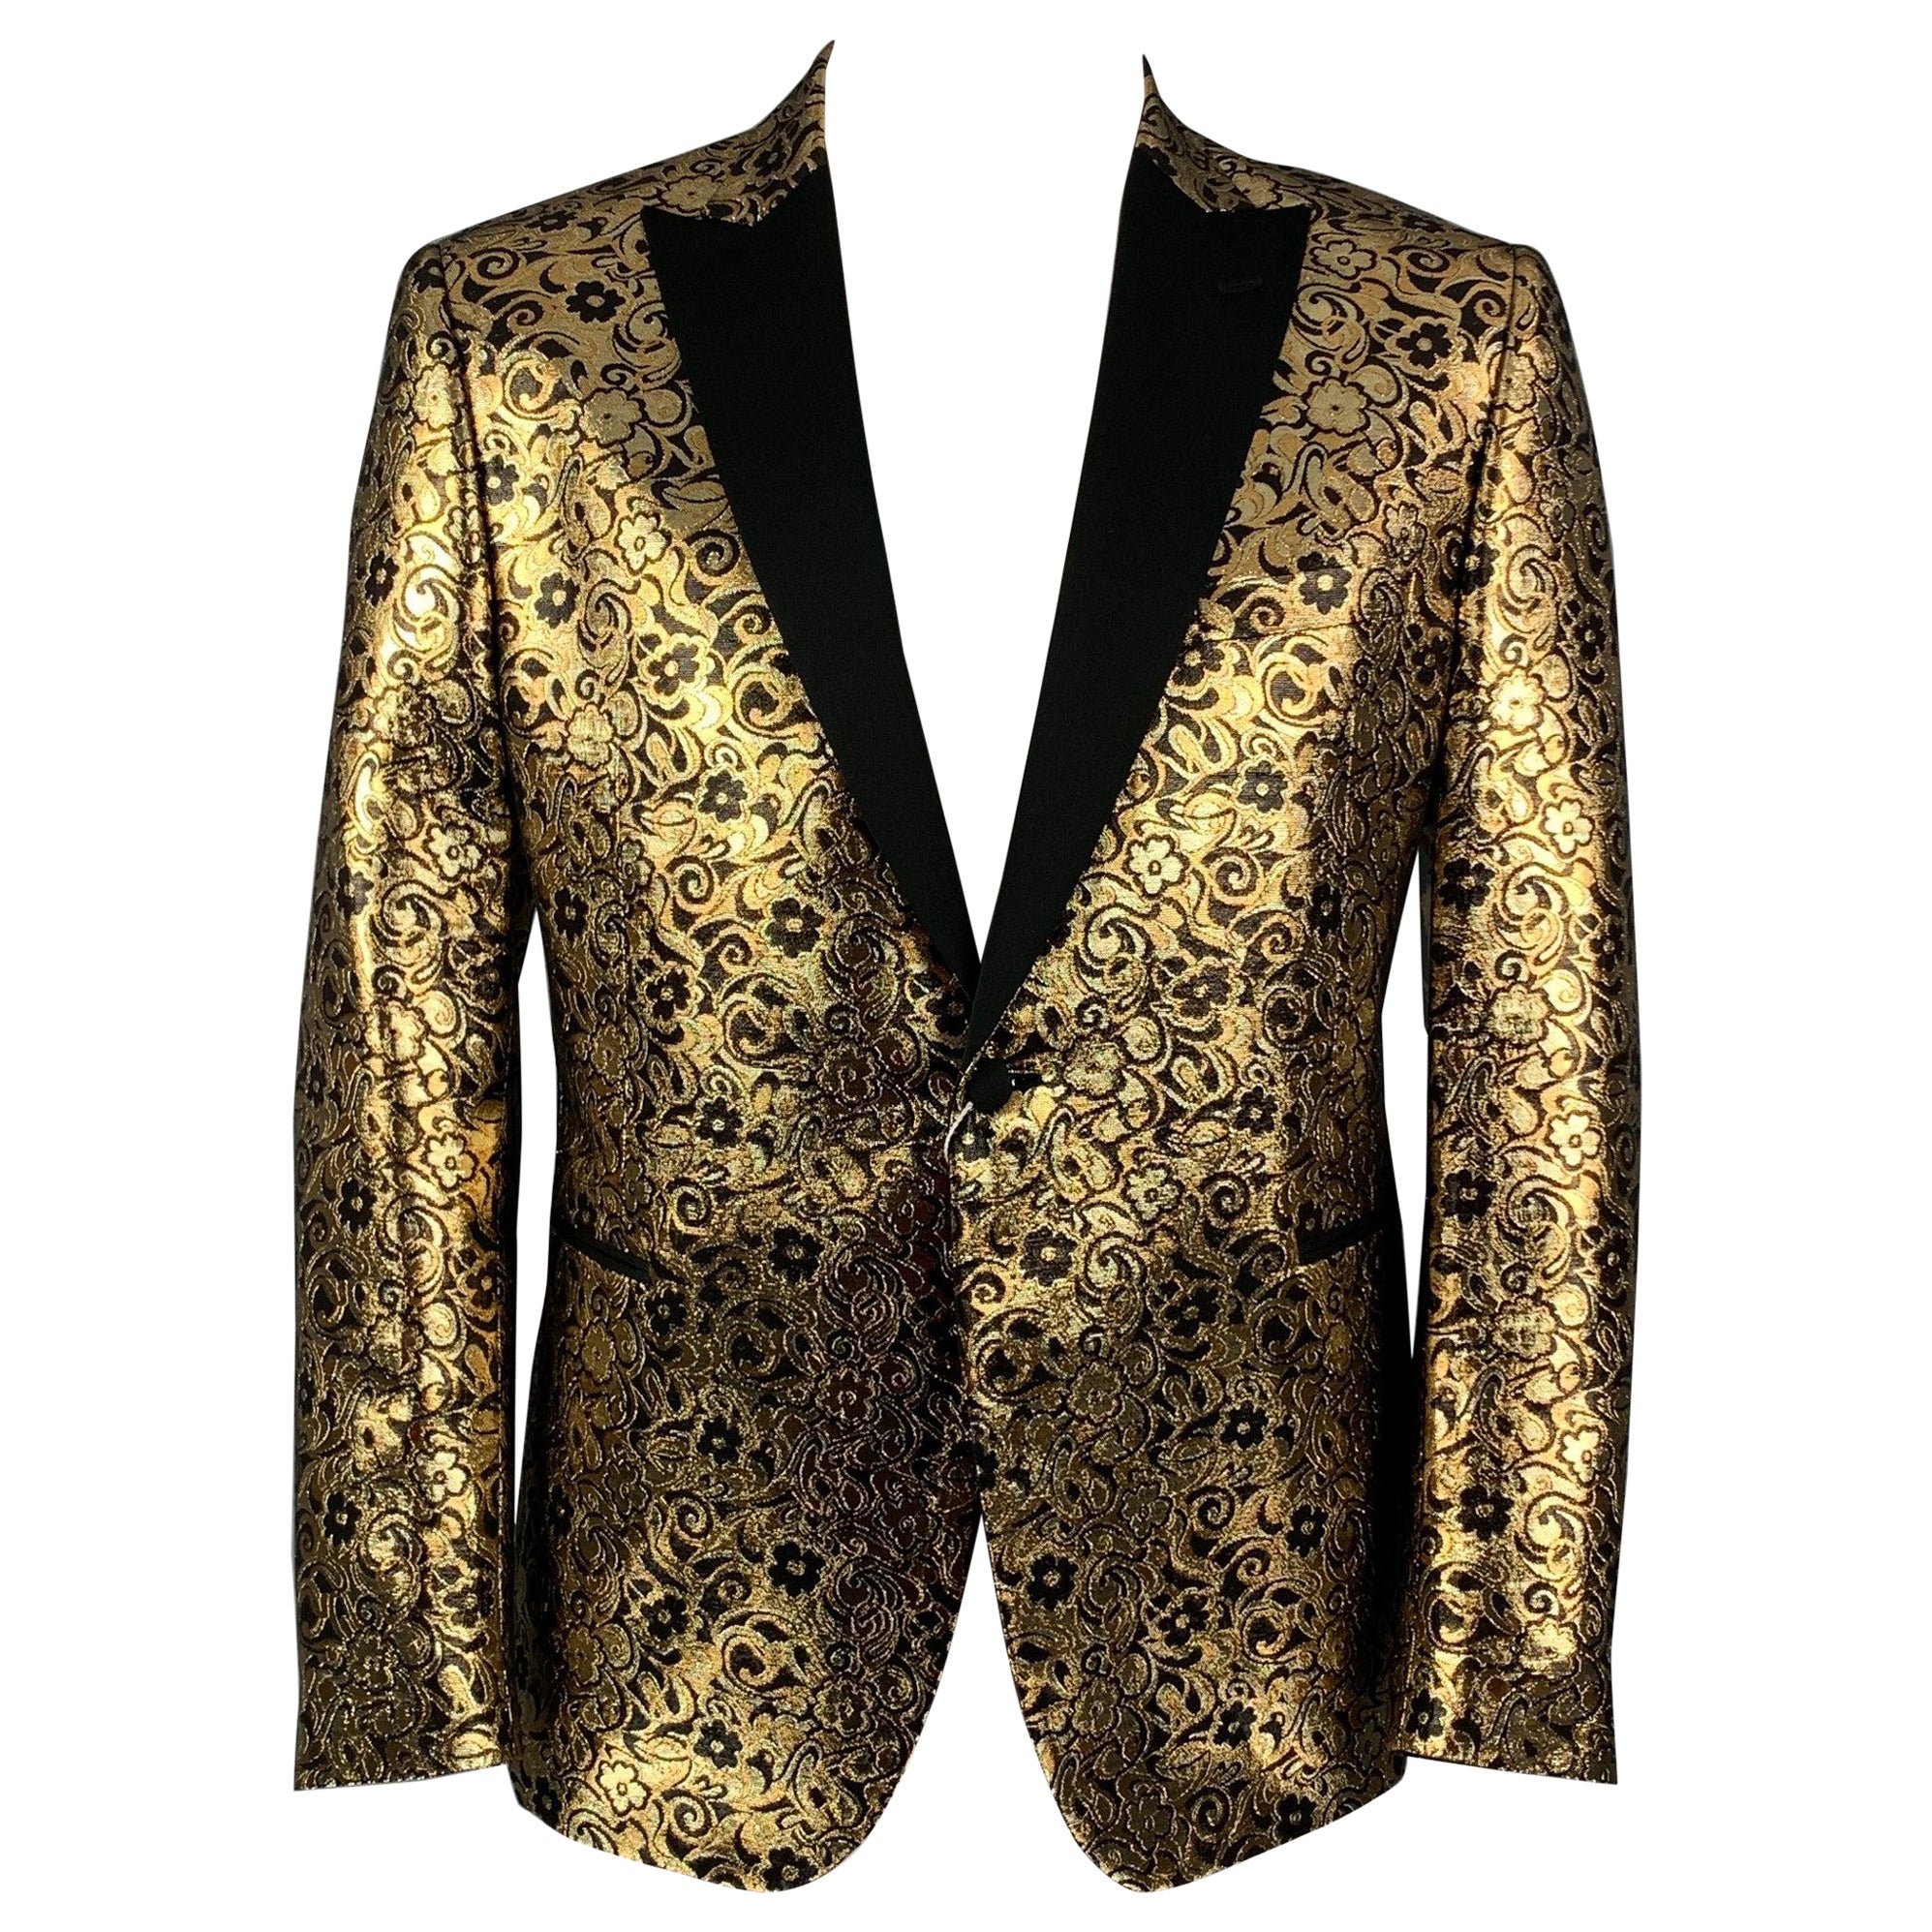 MICHAEL KORS Size 46 Black Gold Jacquard Polyester Peak Lapel Sport Coat For Sale